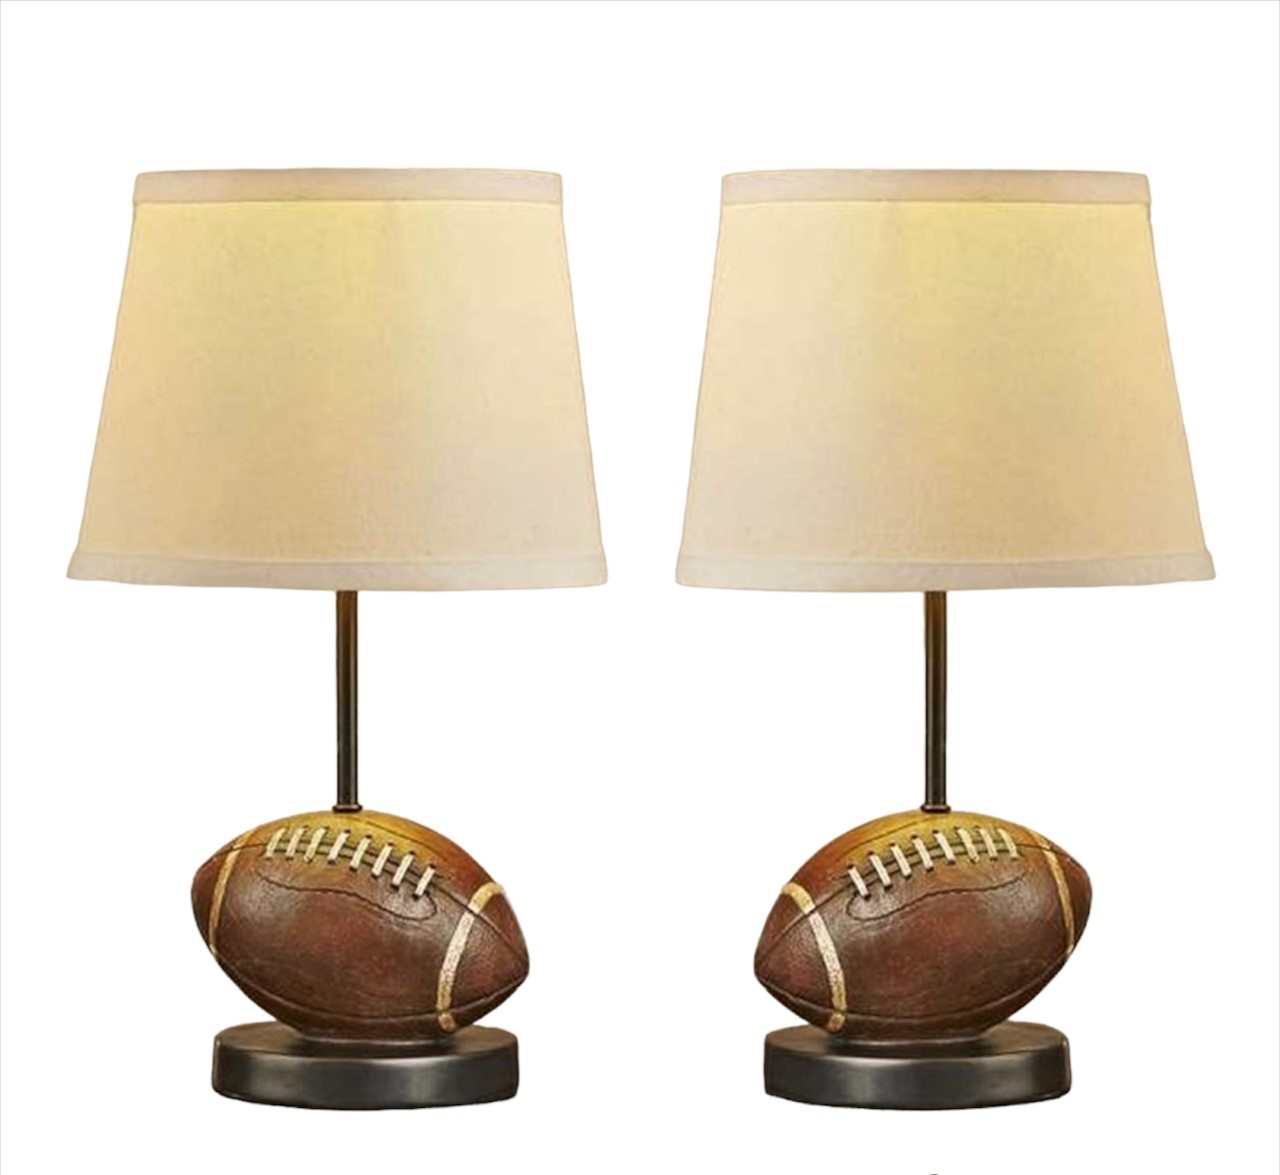 Football lamps